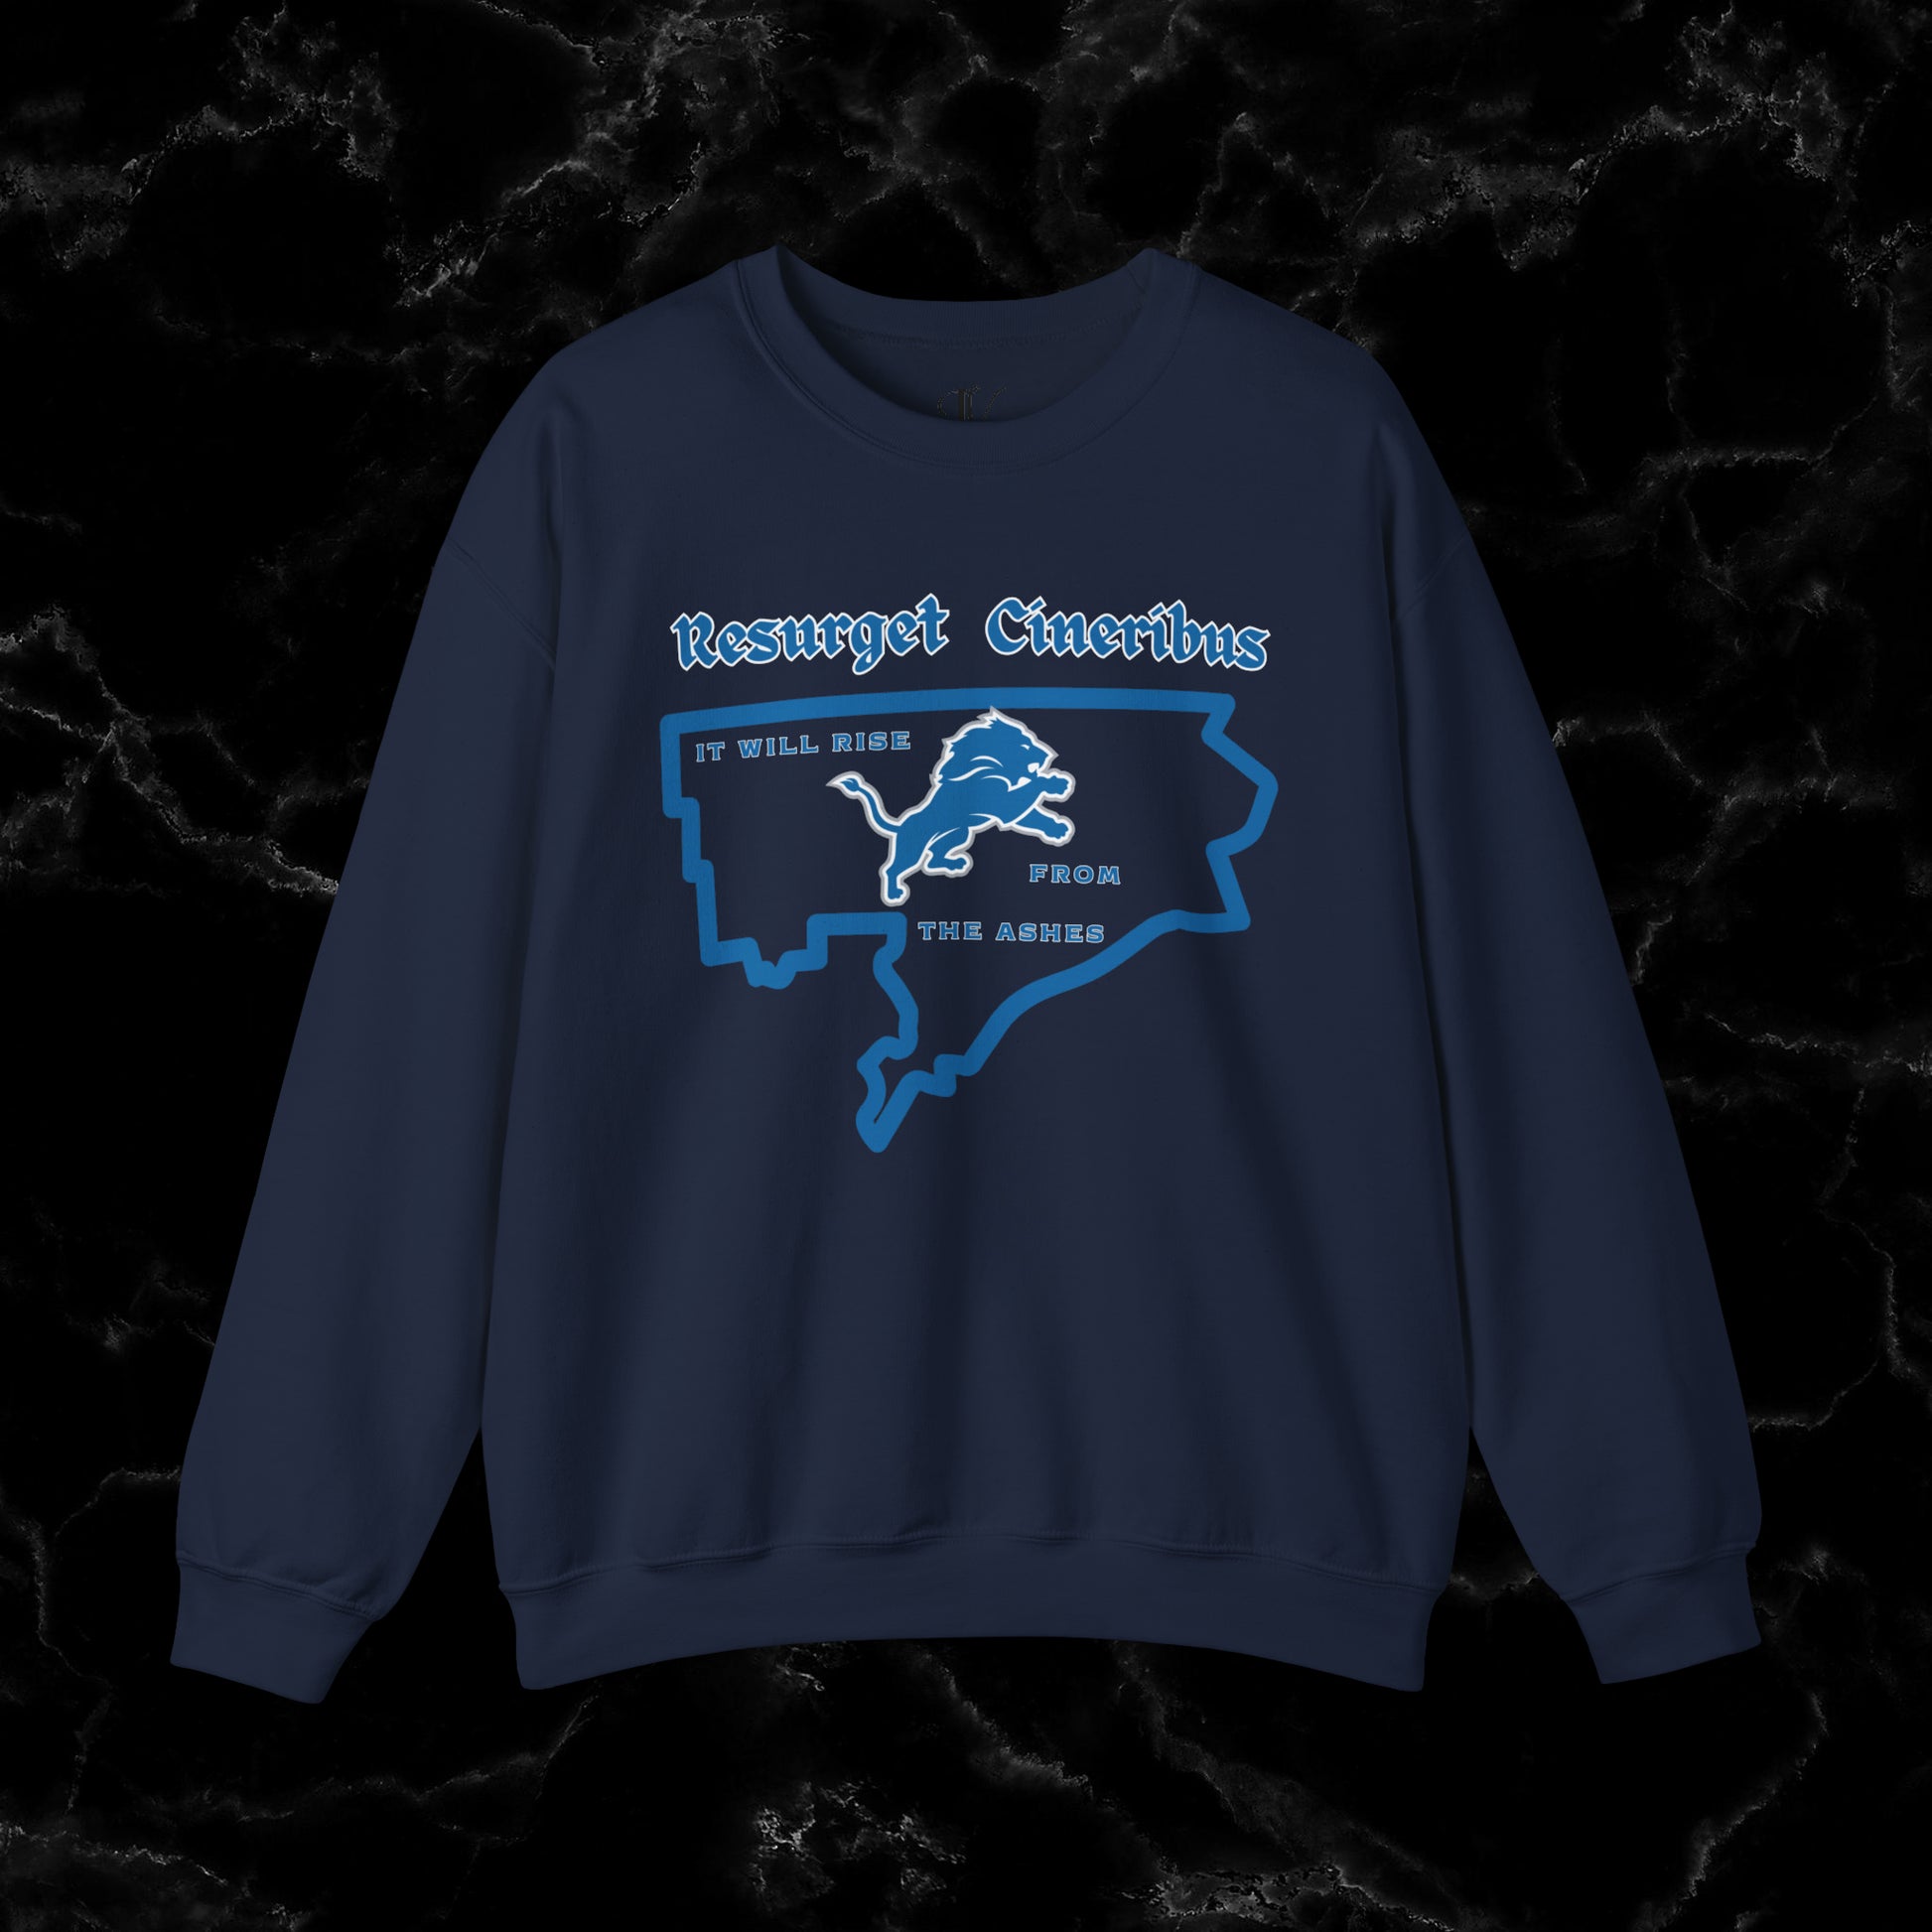 Resurget Cineribus Unisex Crewneck Sweatshirt - Latin Inspirational Gifts for Detroit Sports Football Fans Sweatshirt S Navy 